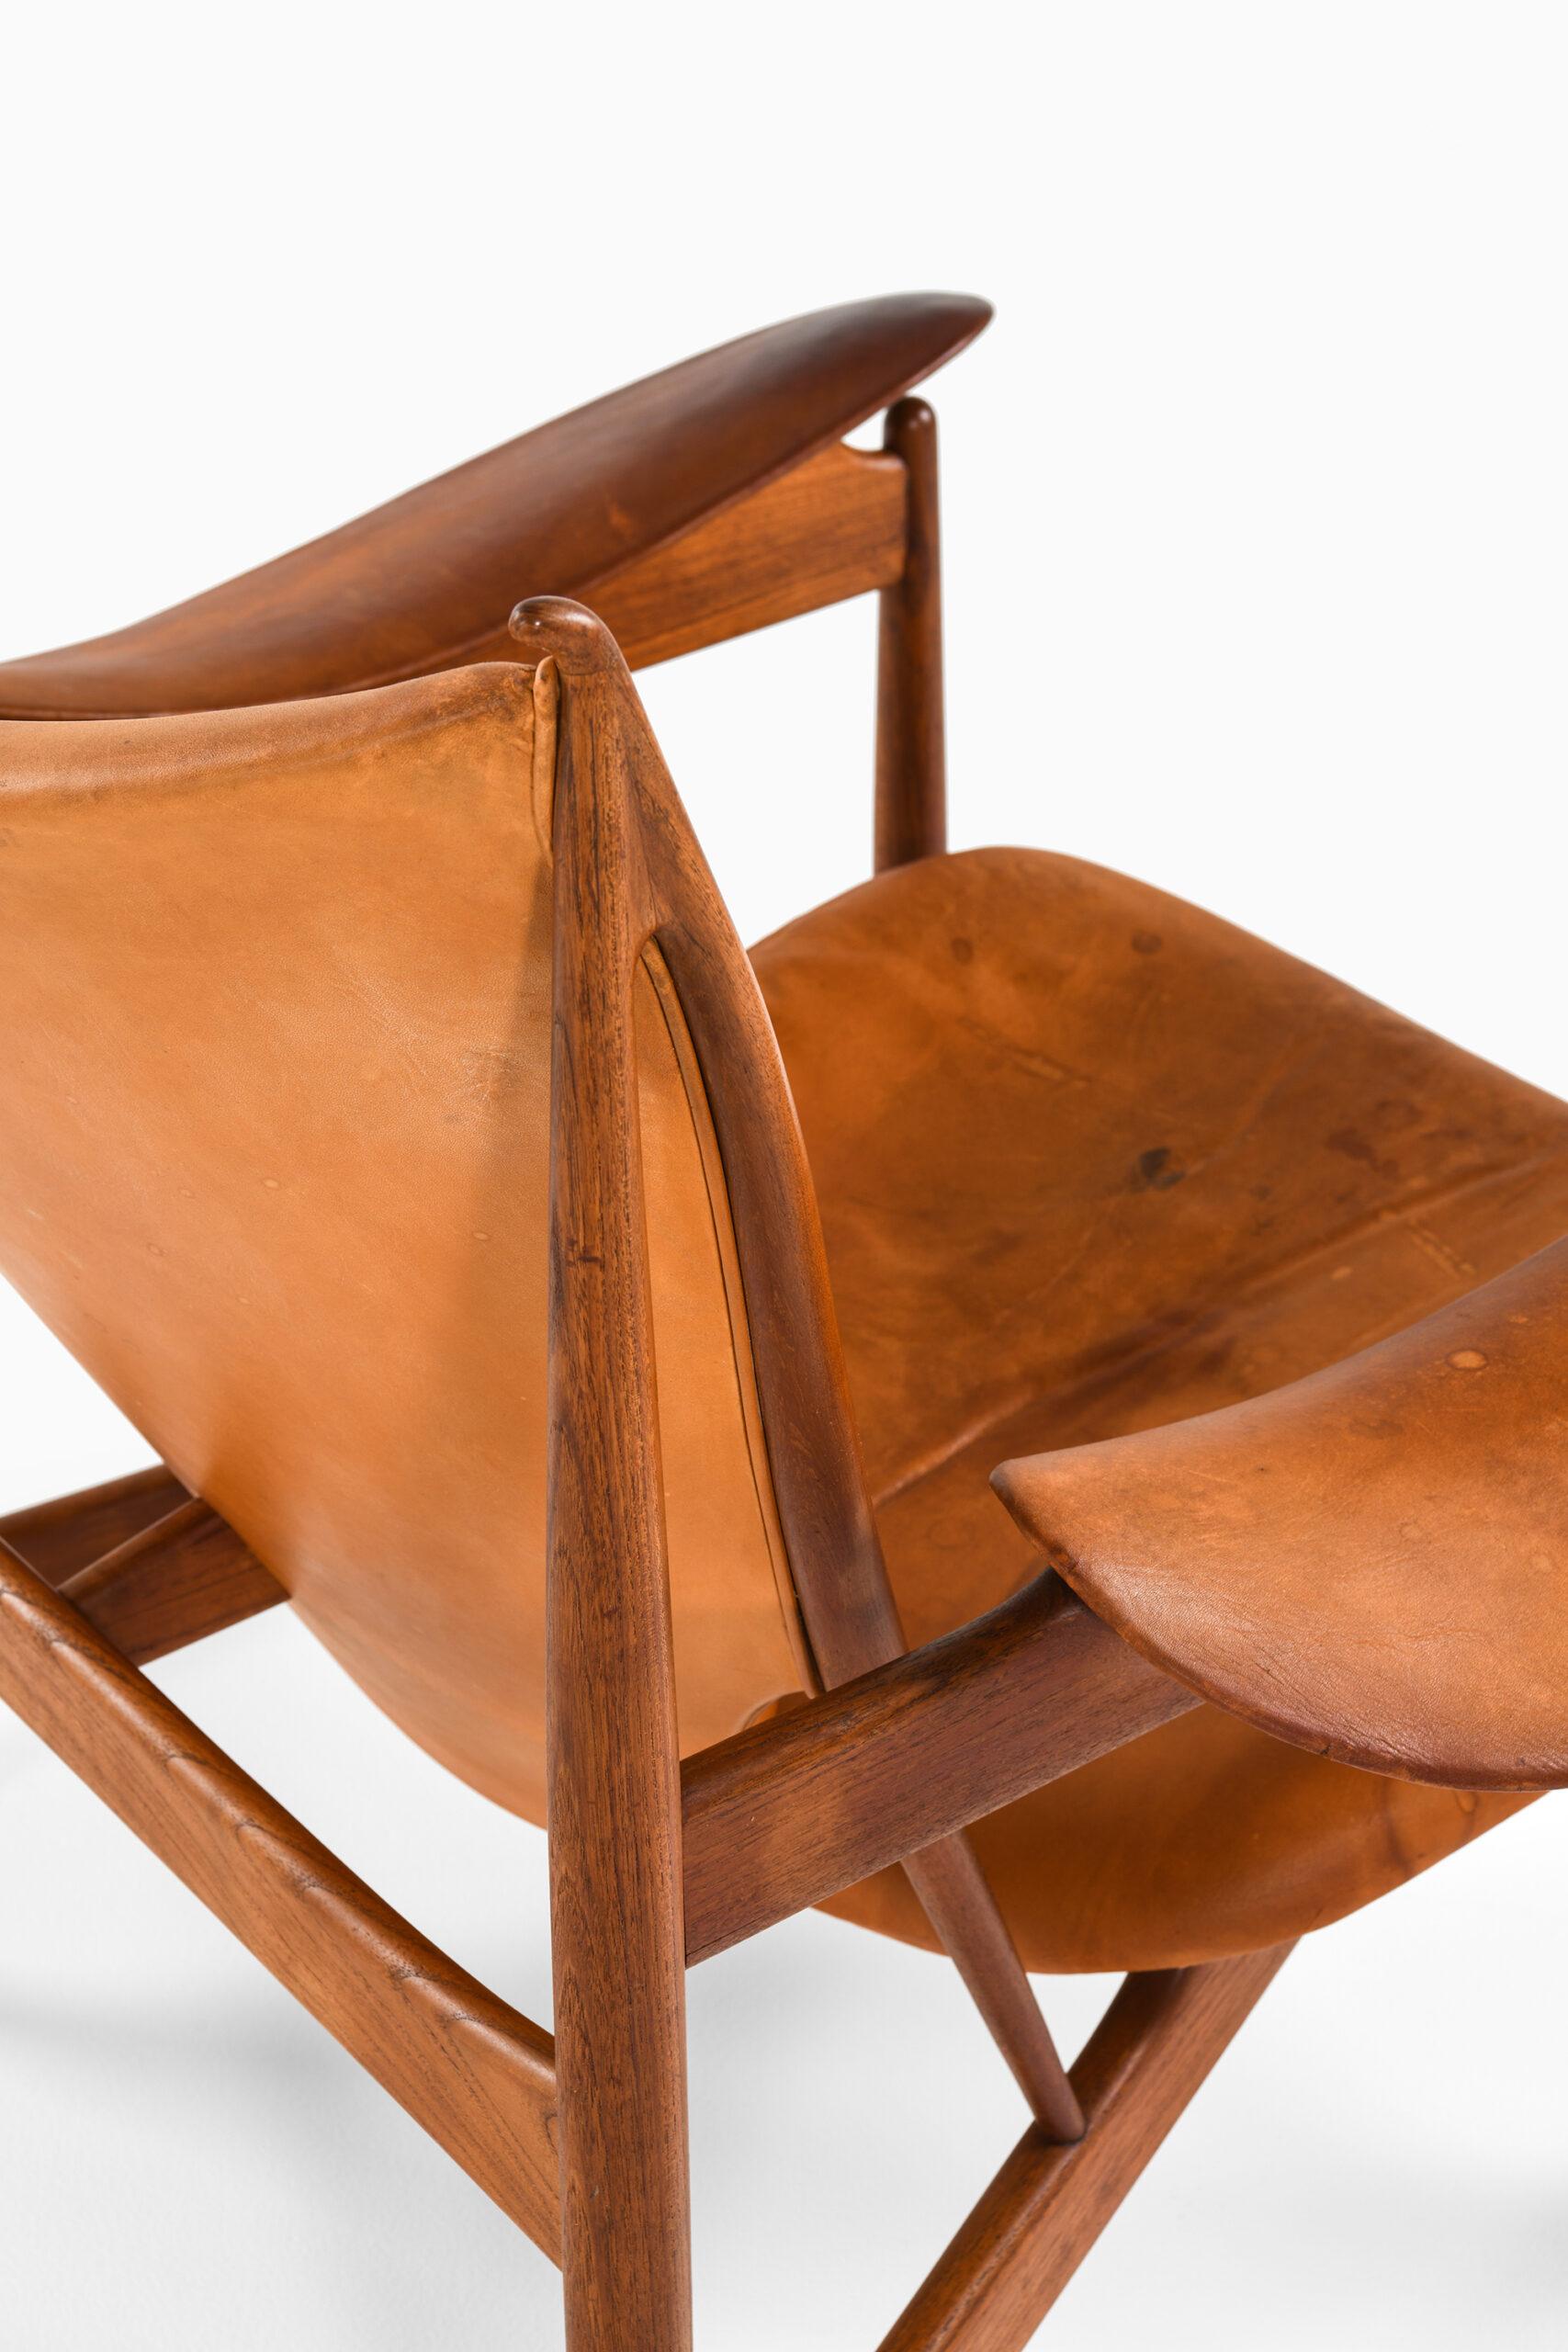 Finn Juhl Chieftain Easy Chair Produced by Cabinetmaker Niels Vodder 8